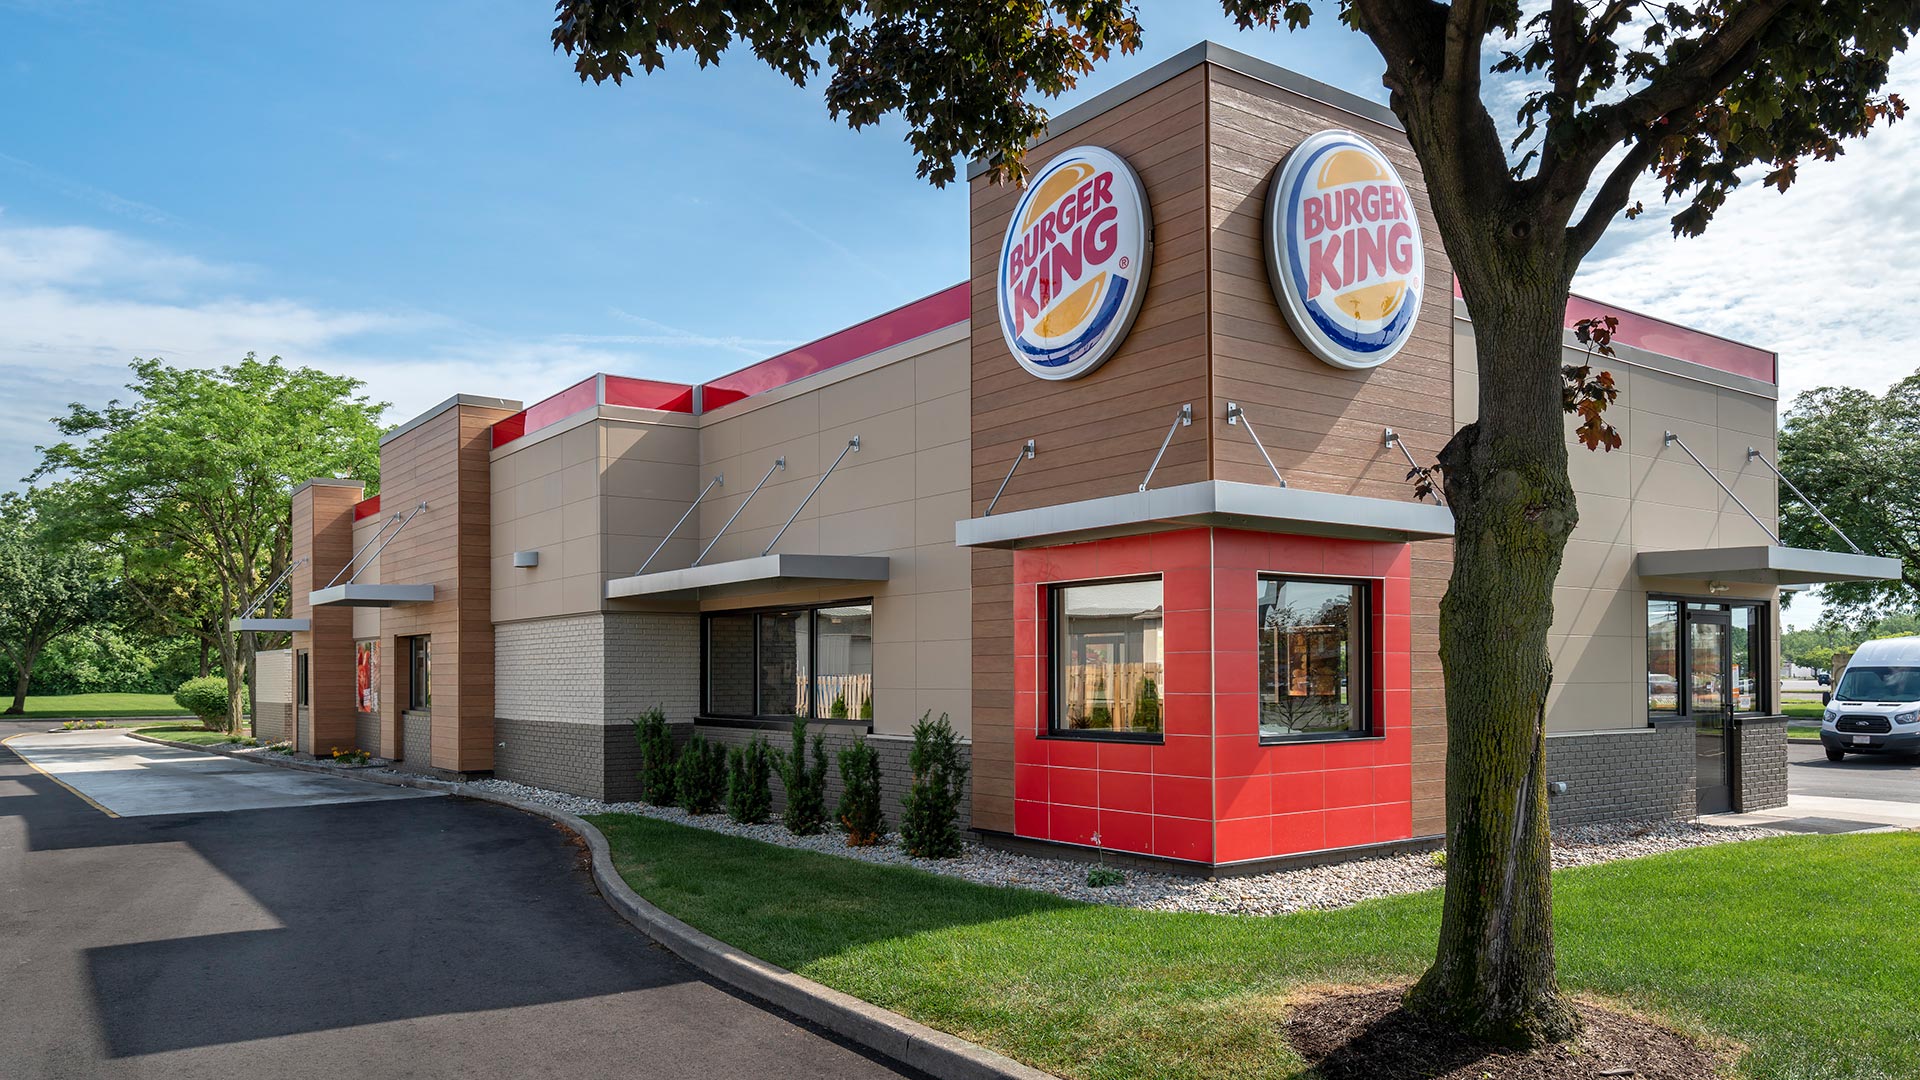 Burger King built by restaurant construction company